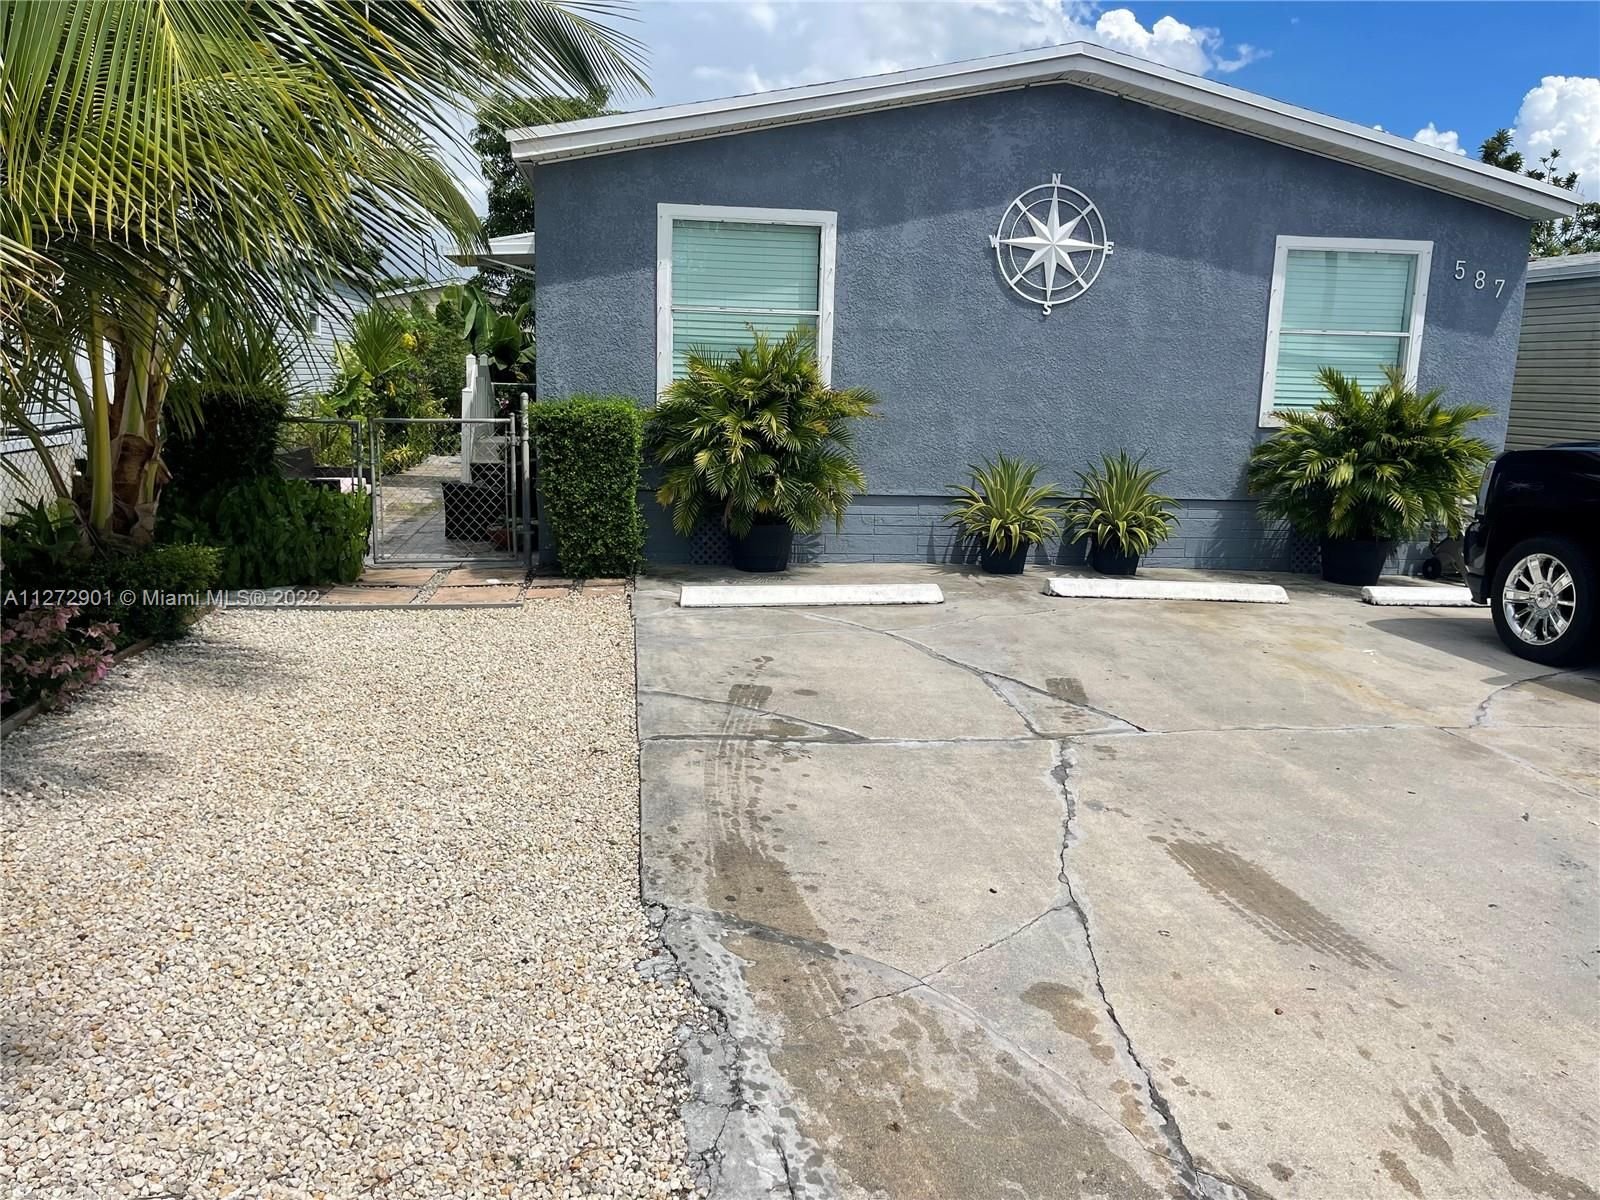 Real estate property located at 19800 180th Ave Unit 587, Miami-Dade County, Miami, FL